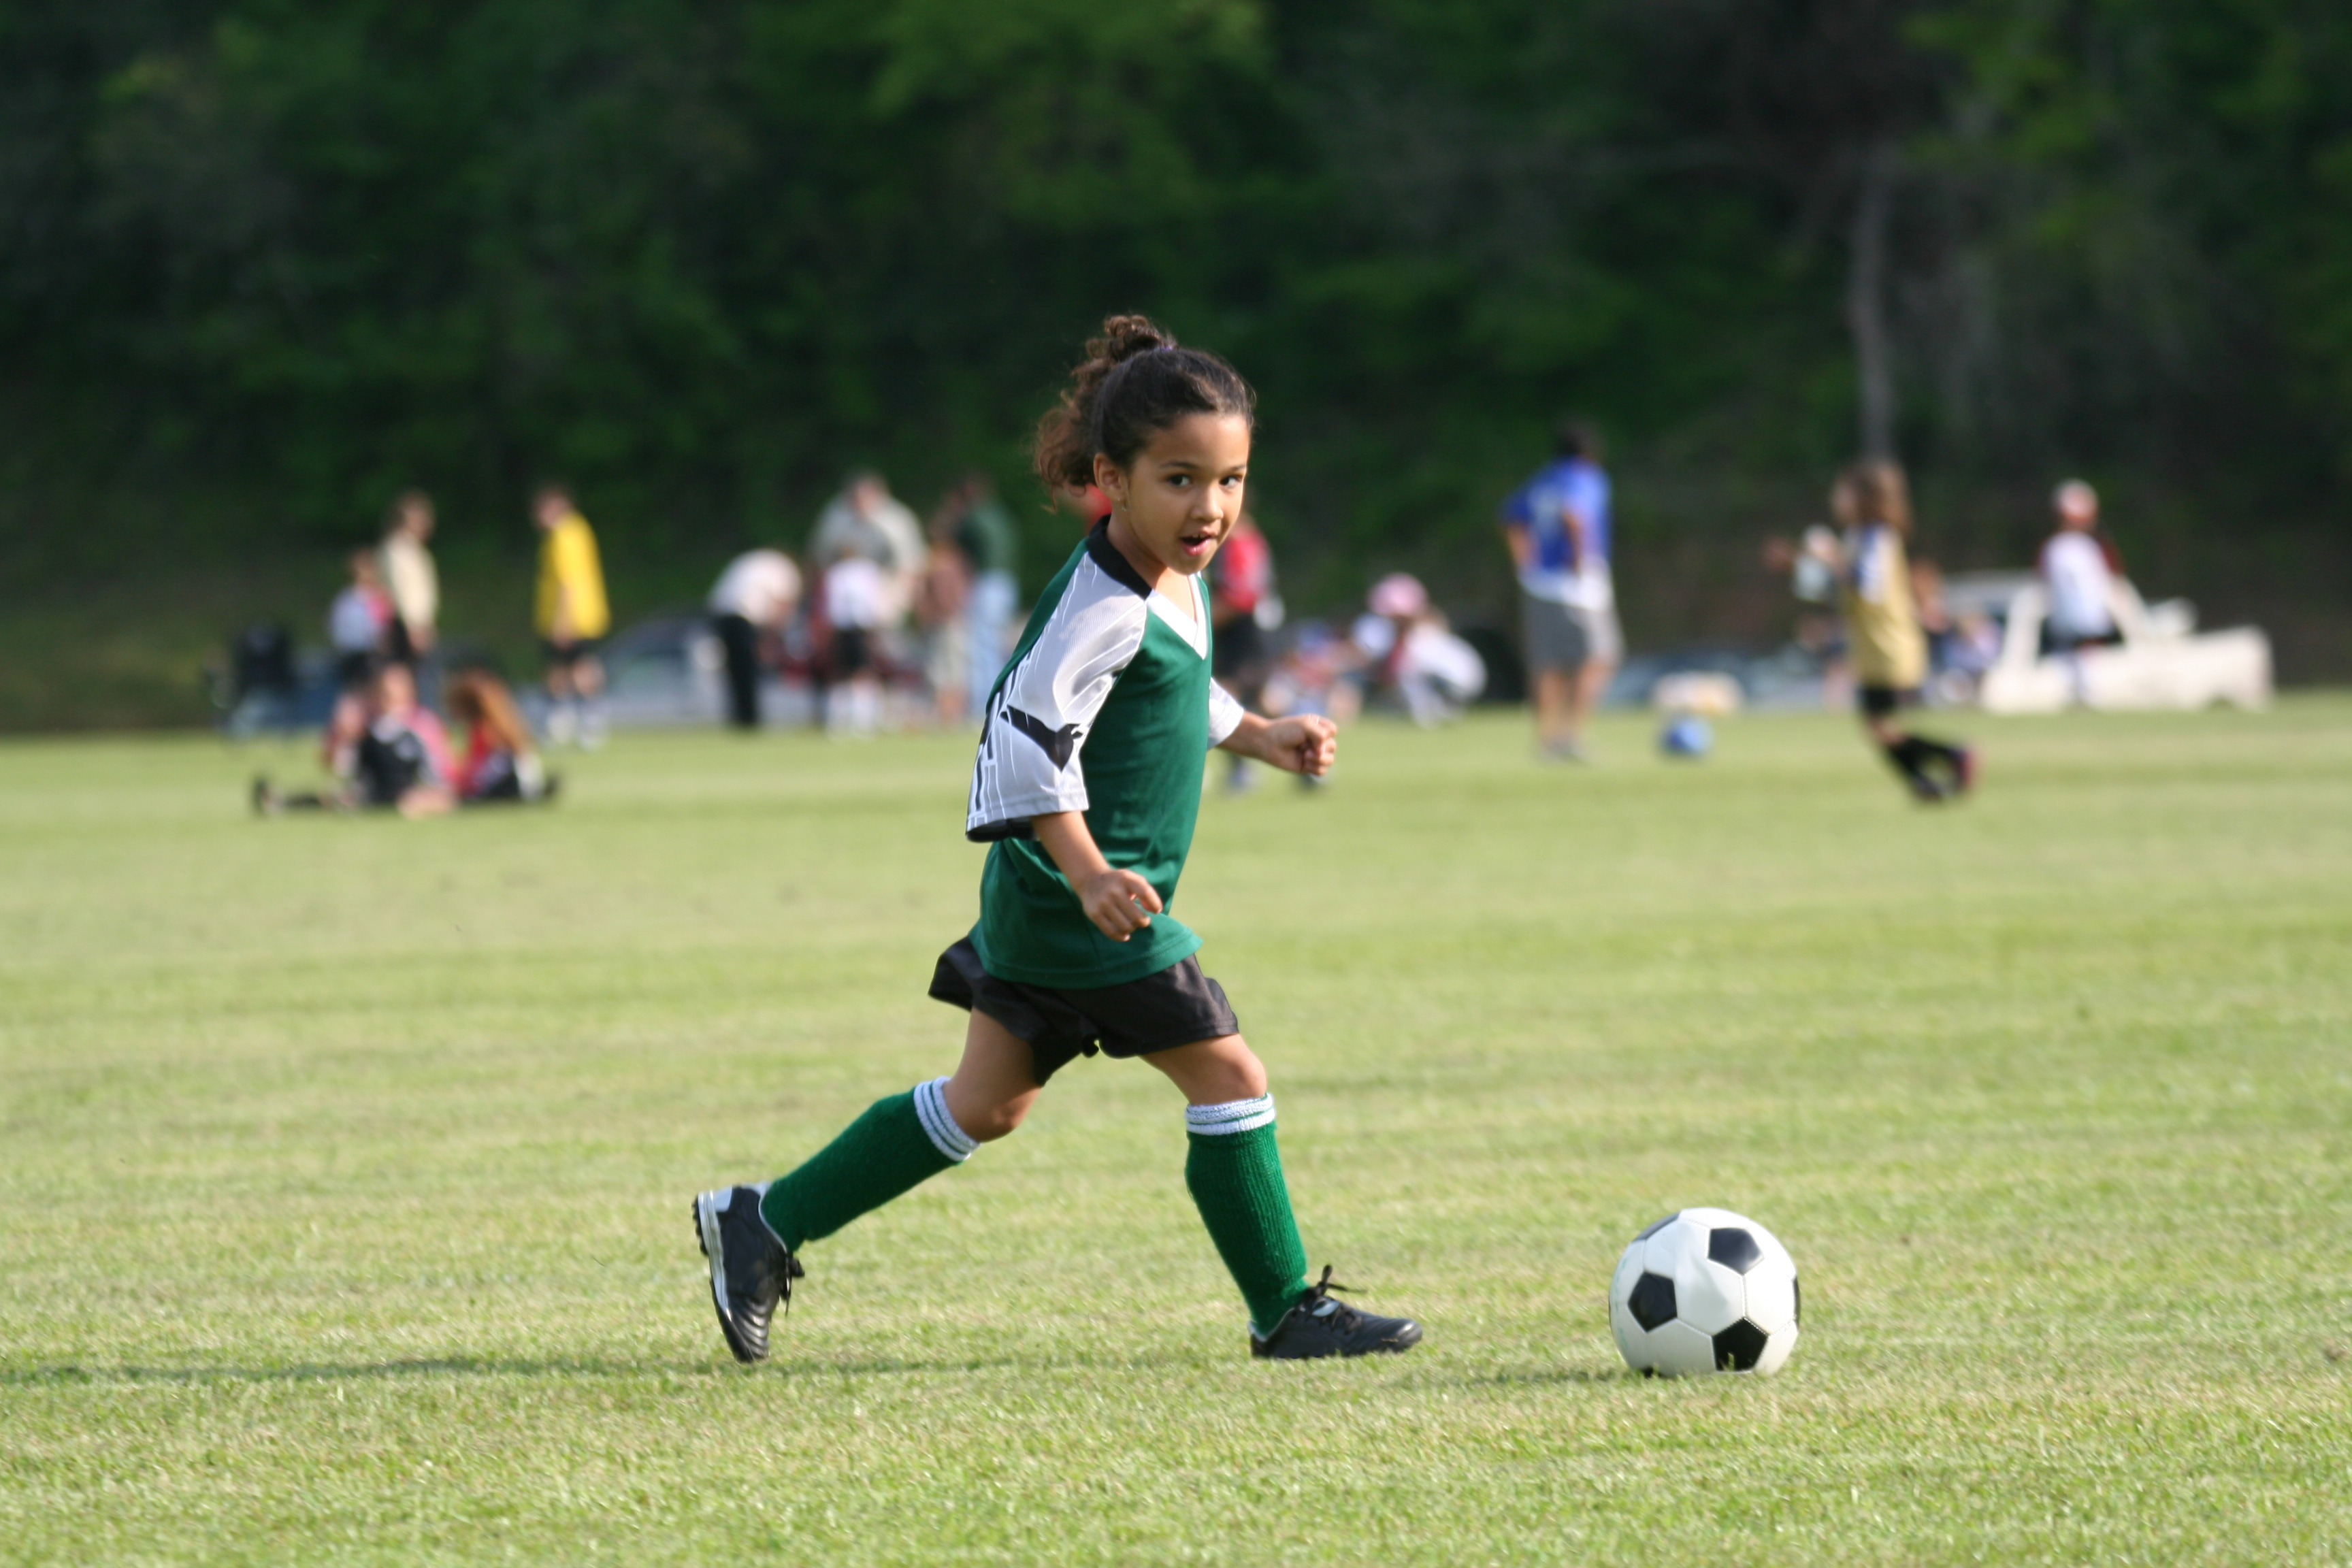 Child Sports Specialization